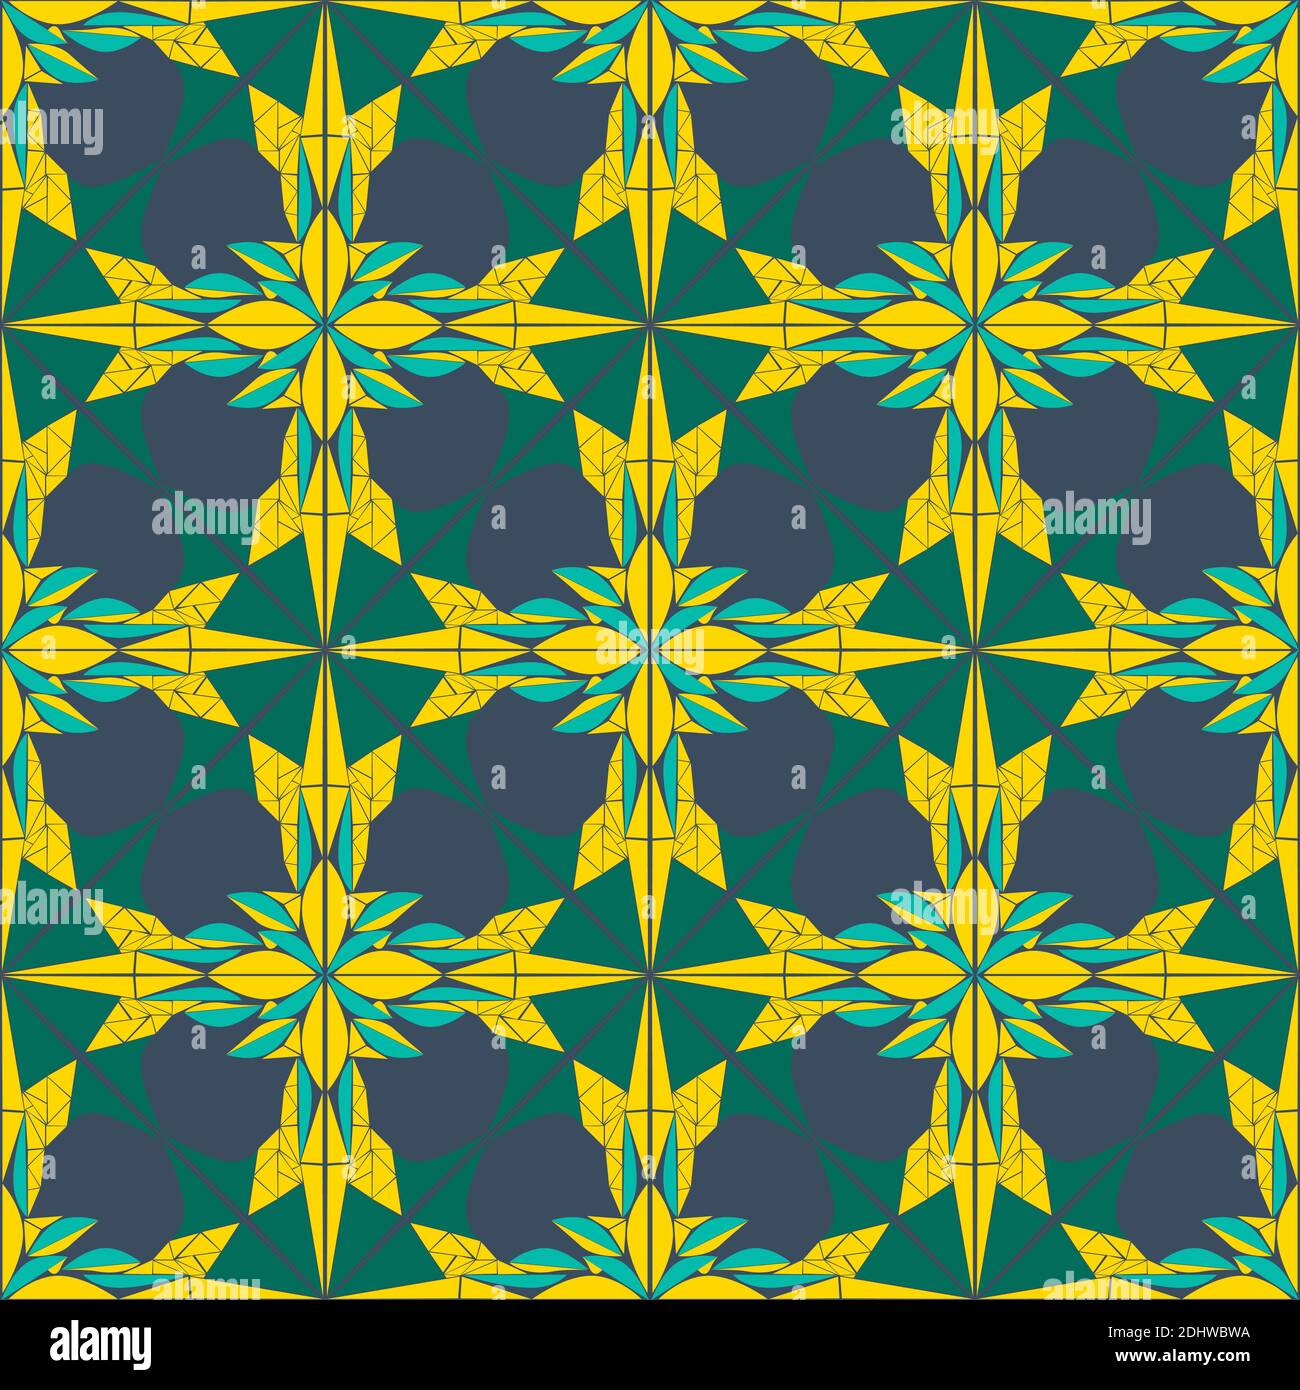 Fliesen Nahtloses Muster. Farbenfrohes Mosaik. Abstrakter Hintergrund. Vektorgrafik Stock Vektor